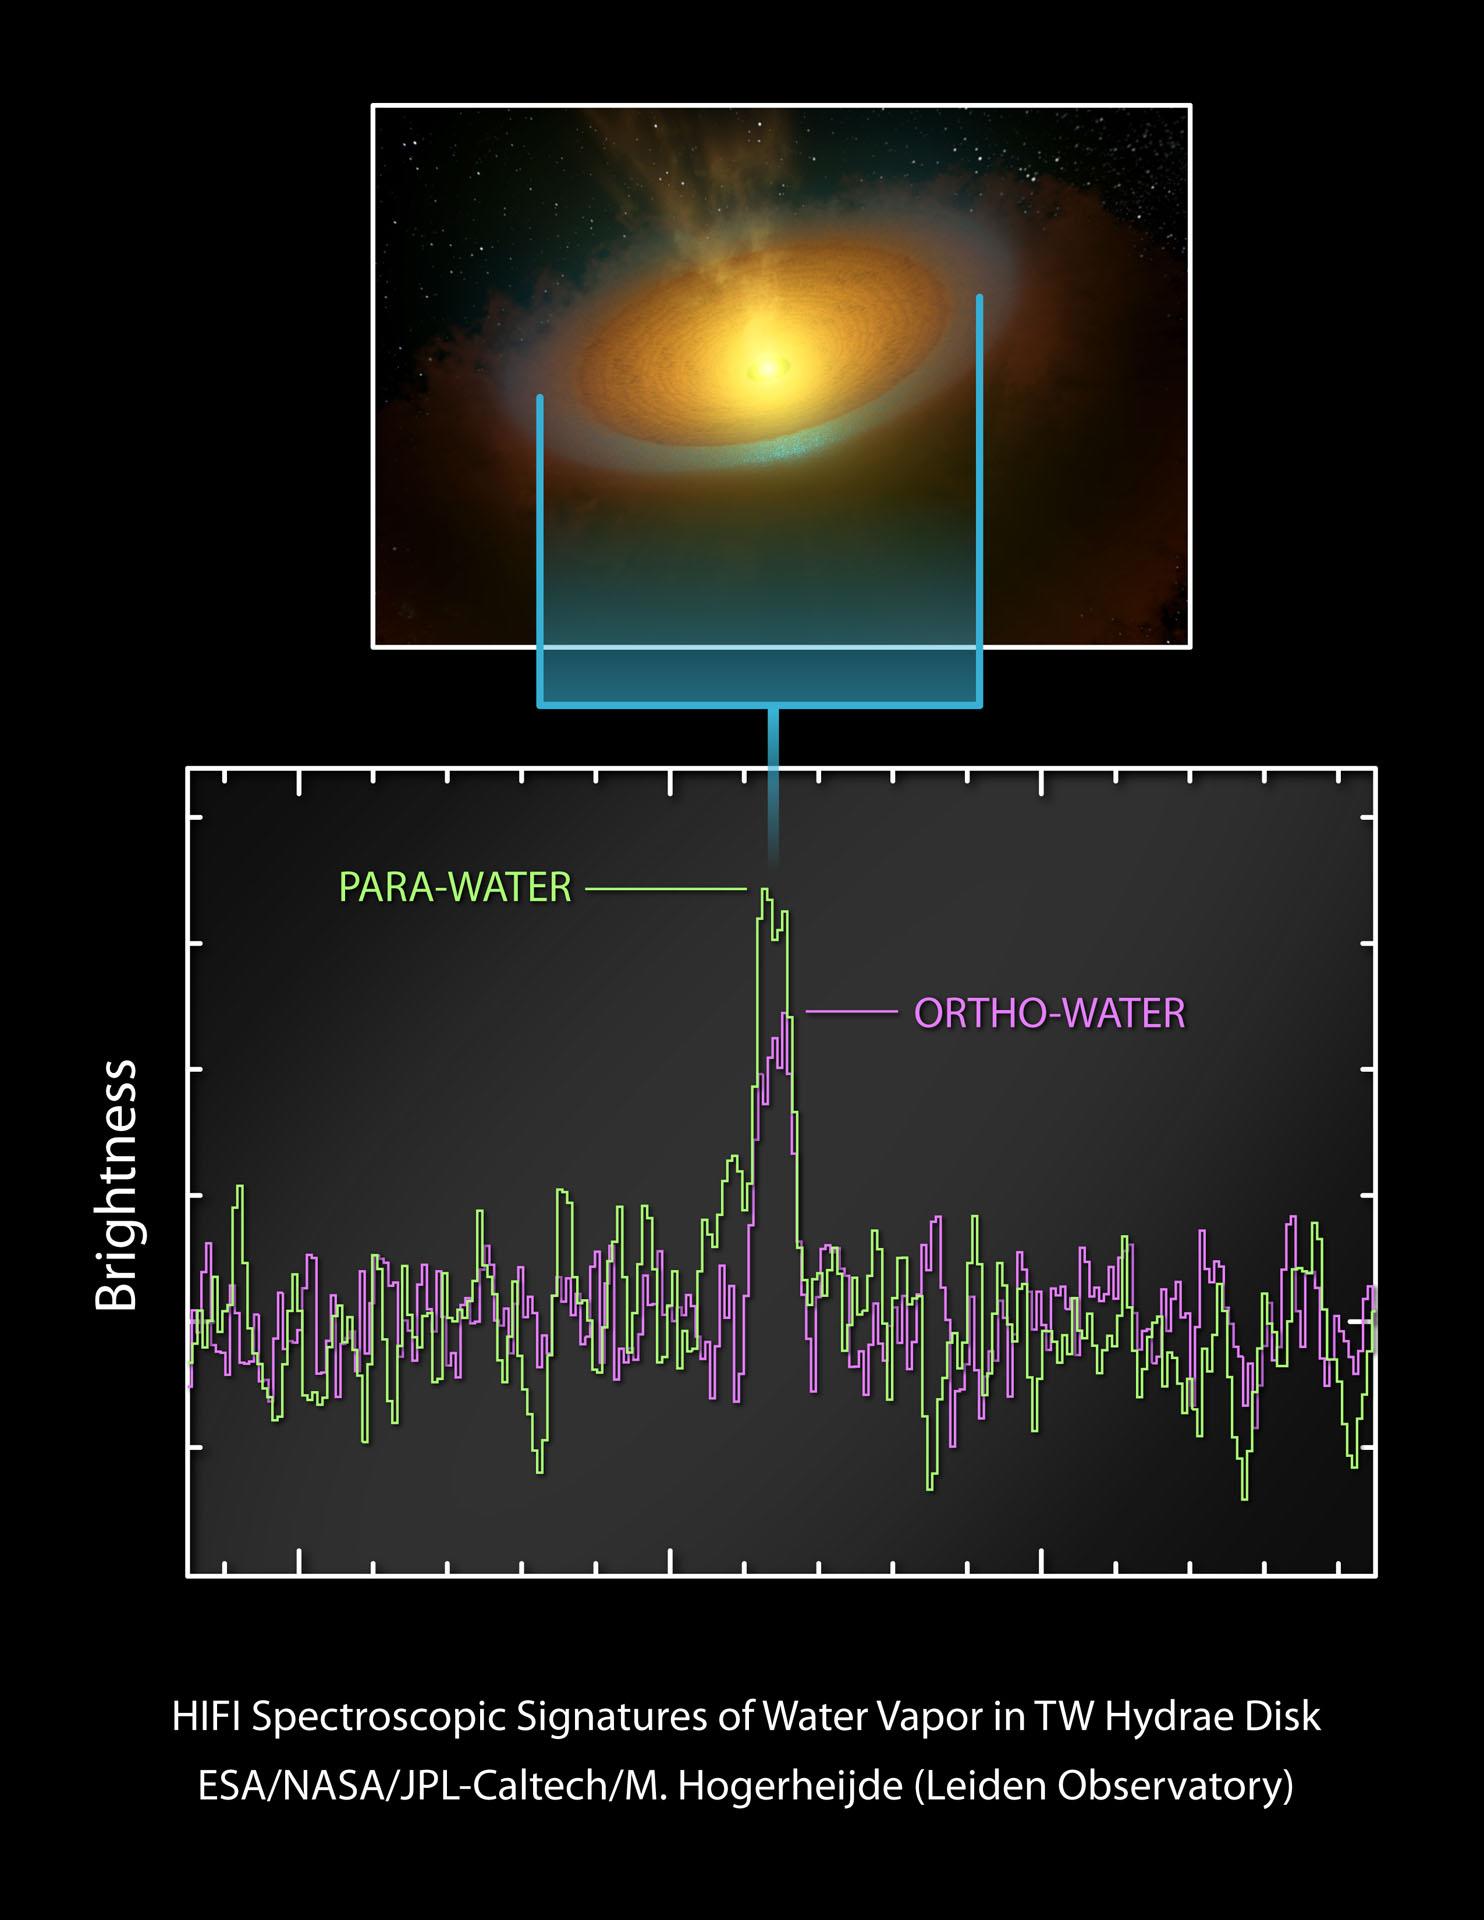 Artist's impression and spectrum of the TW Hydrae protoplanetary disc. Copyright: ESA/NASA/JPL-Caltech/M. Hogerheijde (Leiden Observatory)